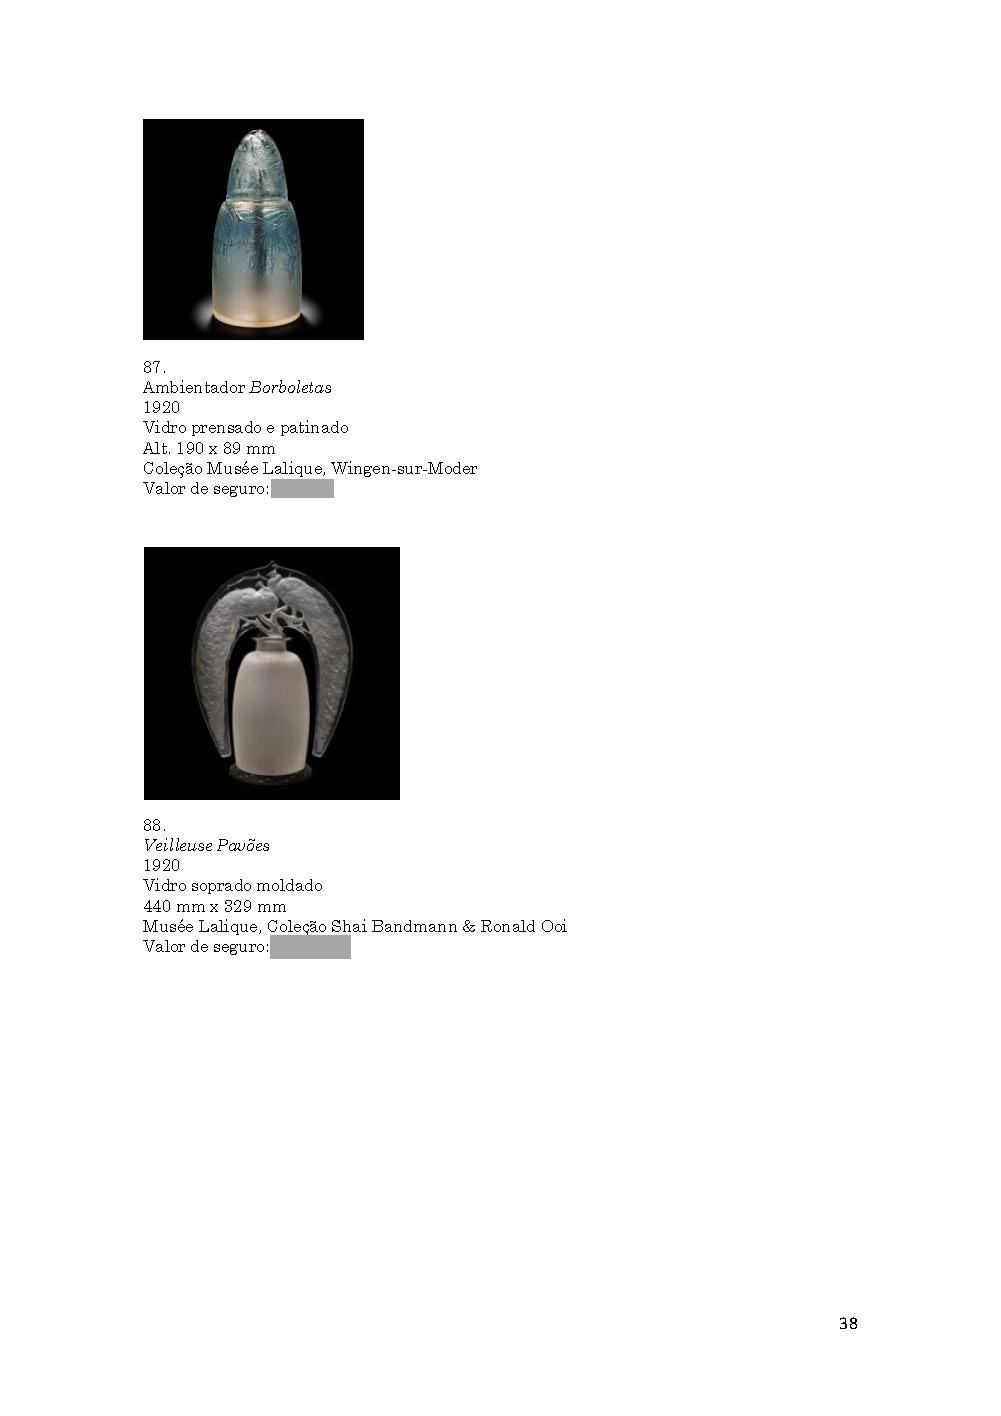 Lista_Vidros_Lalique_25.09.2020_1.38